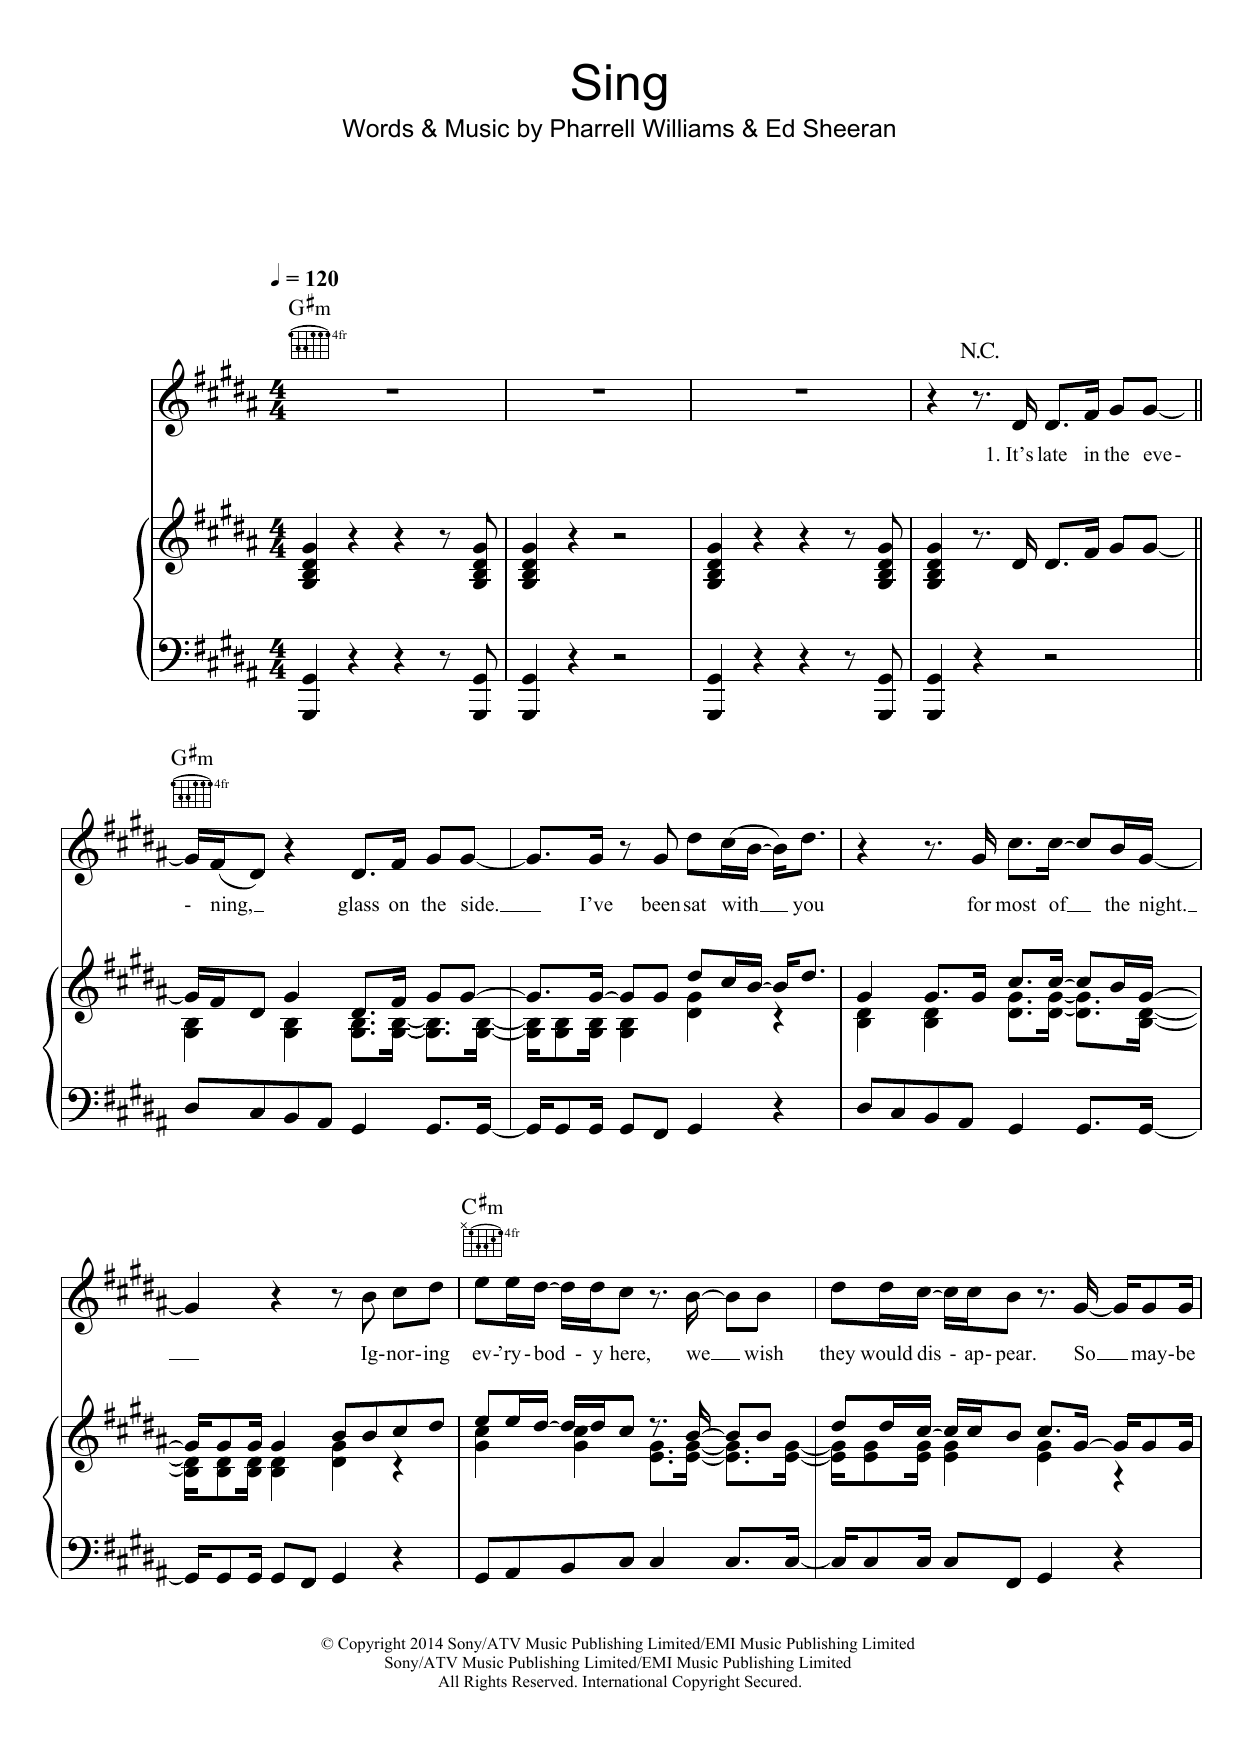 Ed Sheeran Sing Sheet Music Notes & Chords for Easy Piano - Download or Print PDF